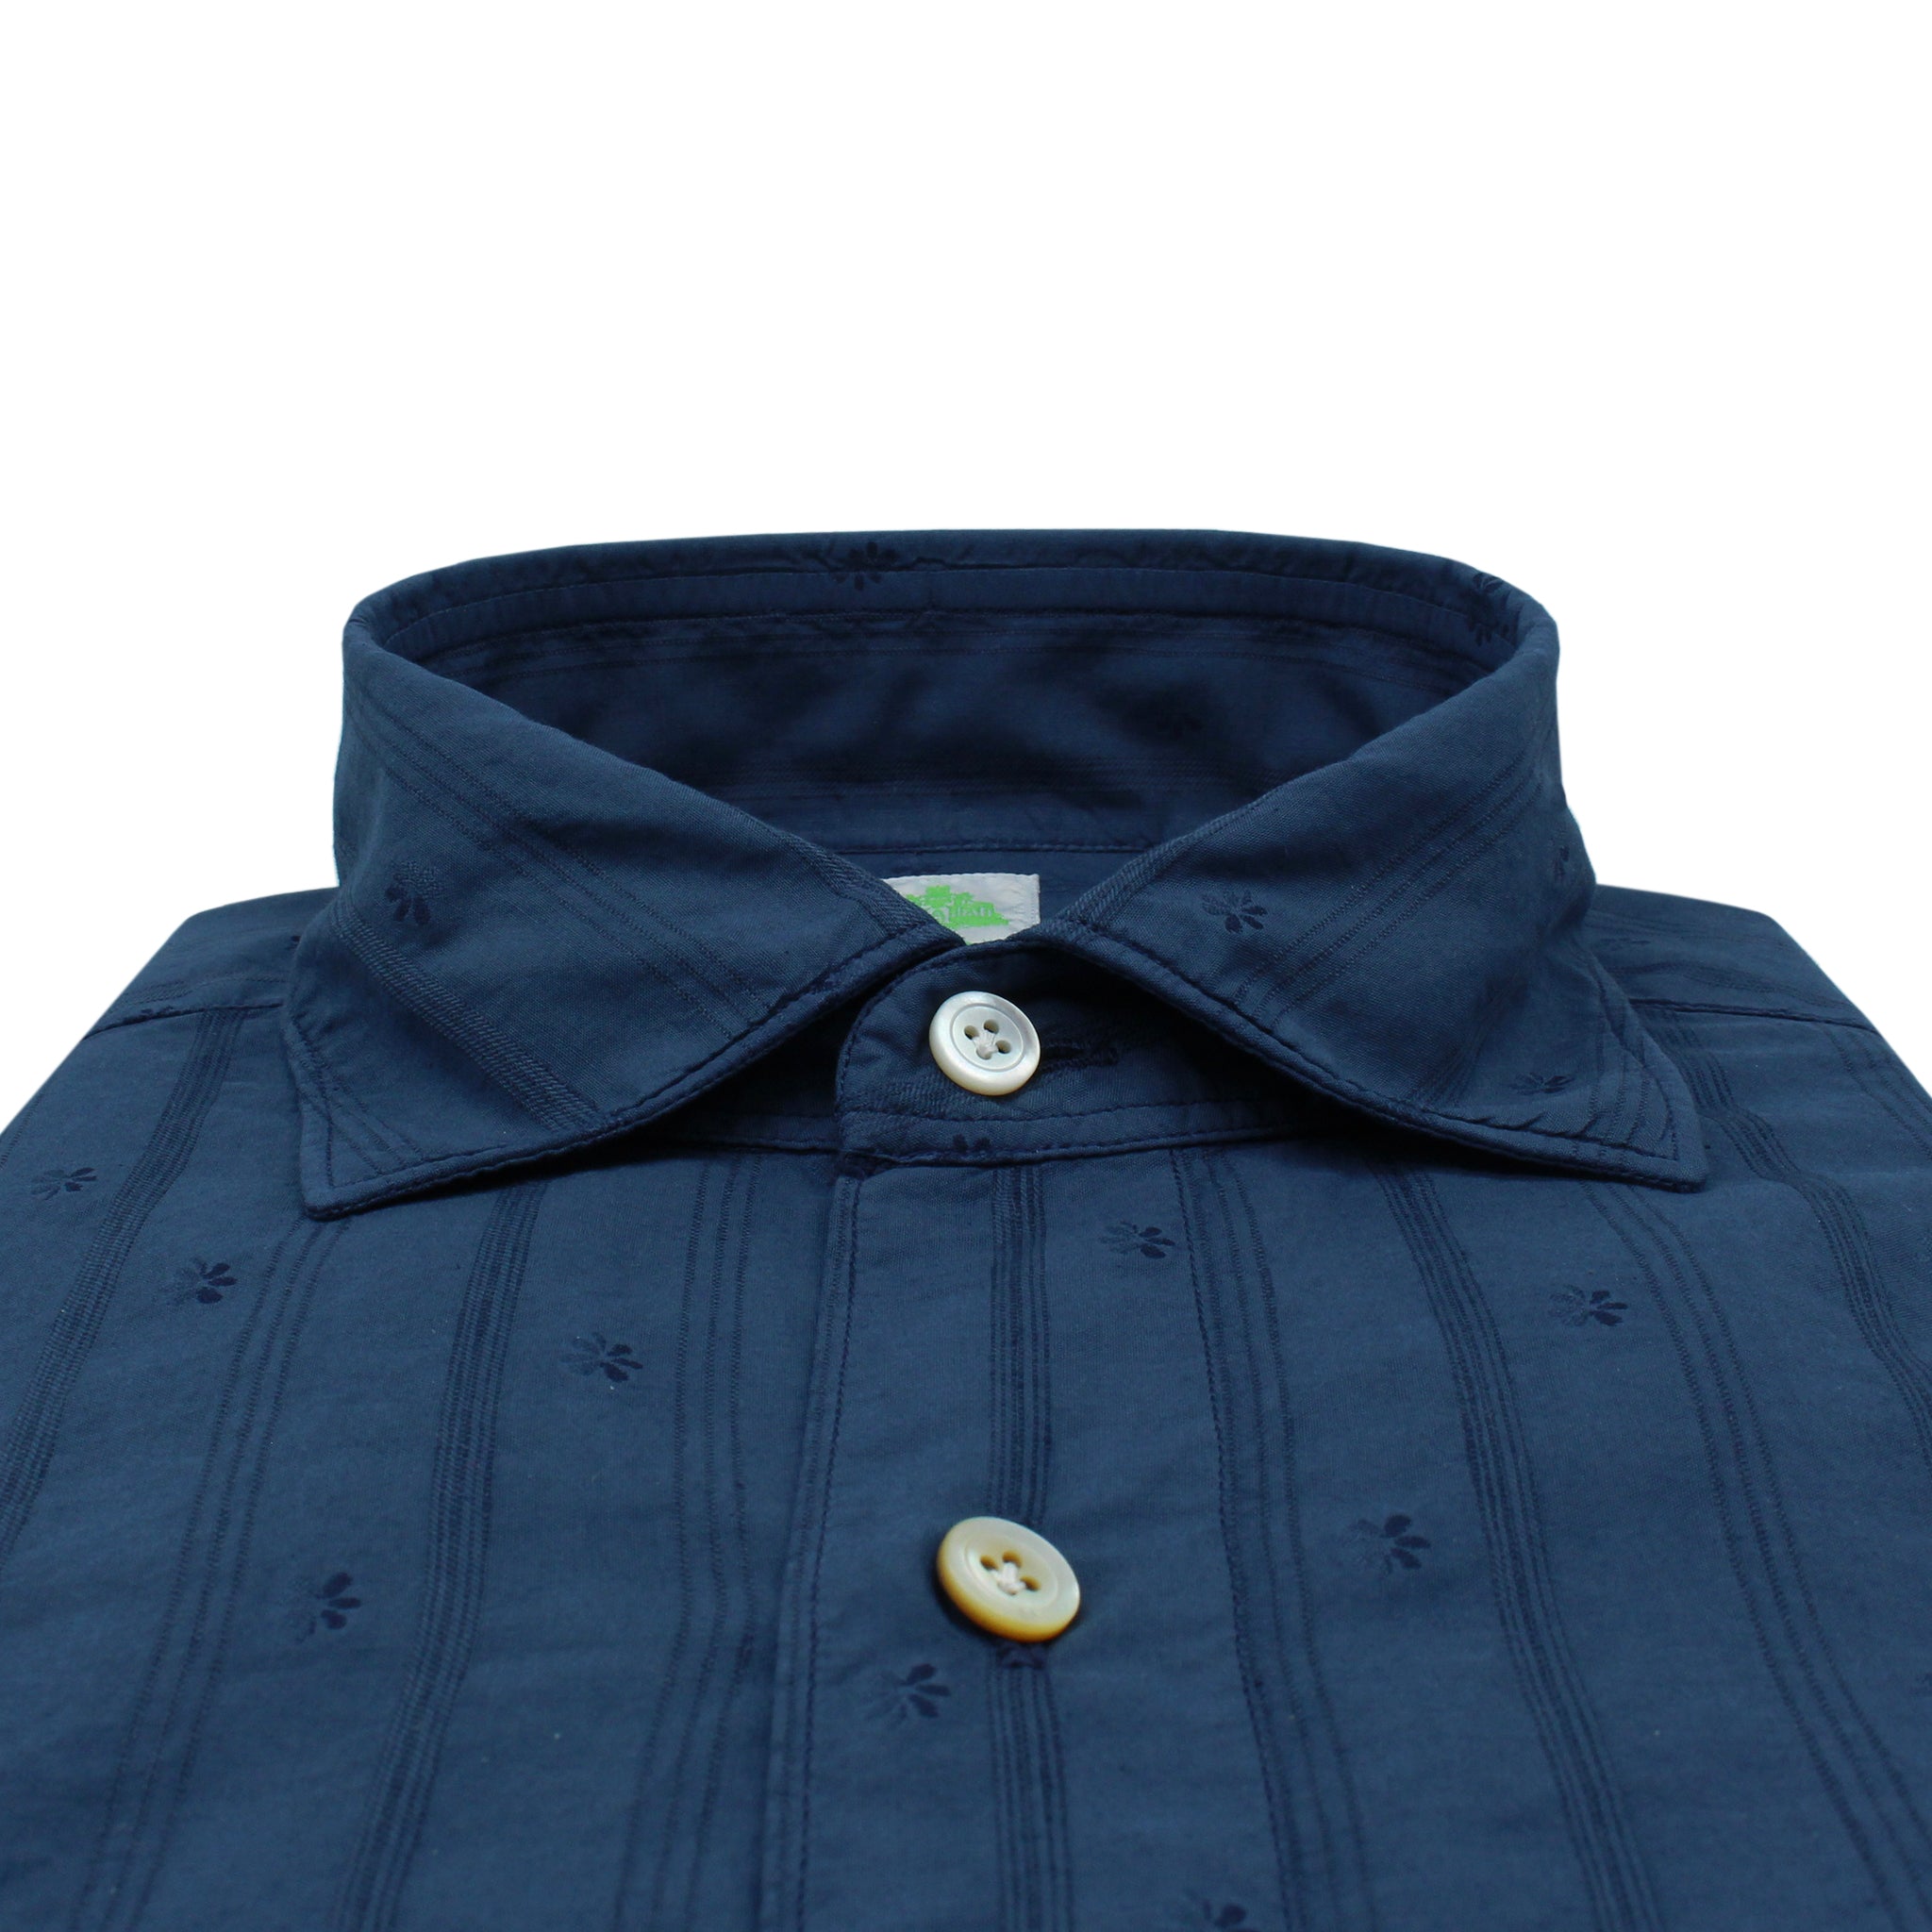 Tokyo sport shirt garment dyed blue patterned bottom